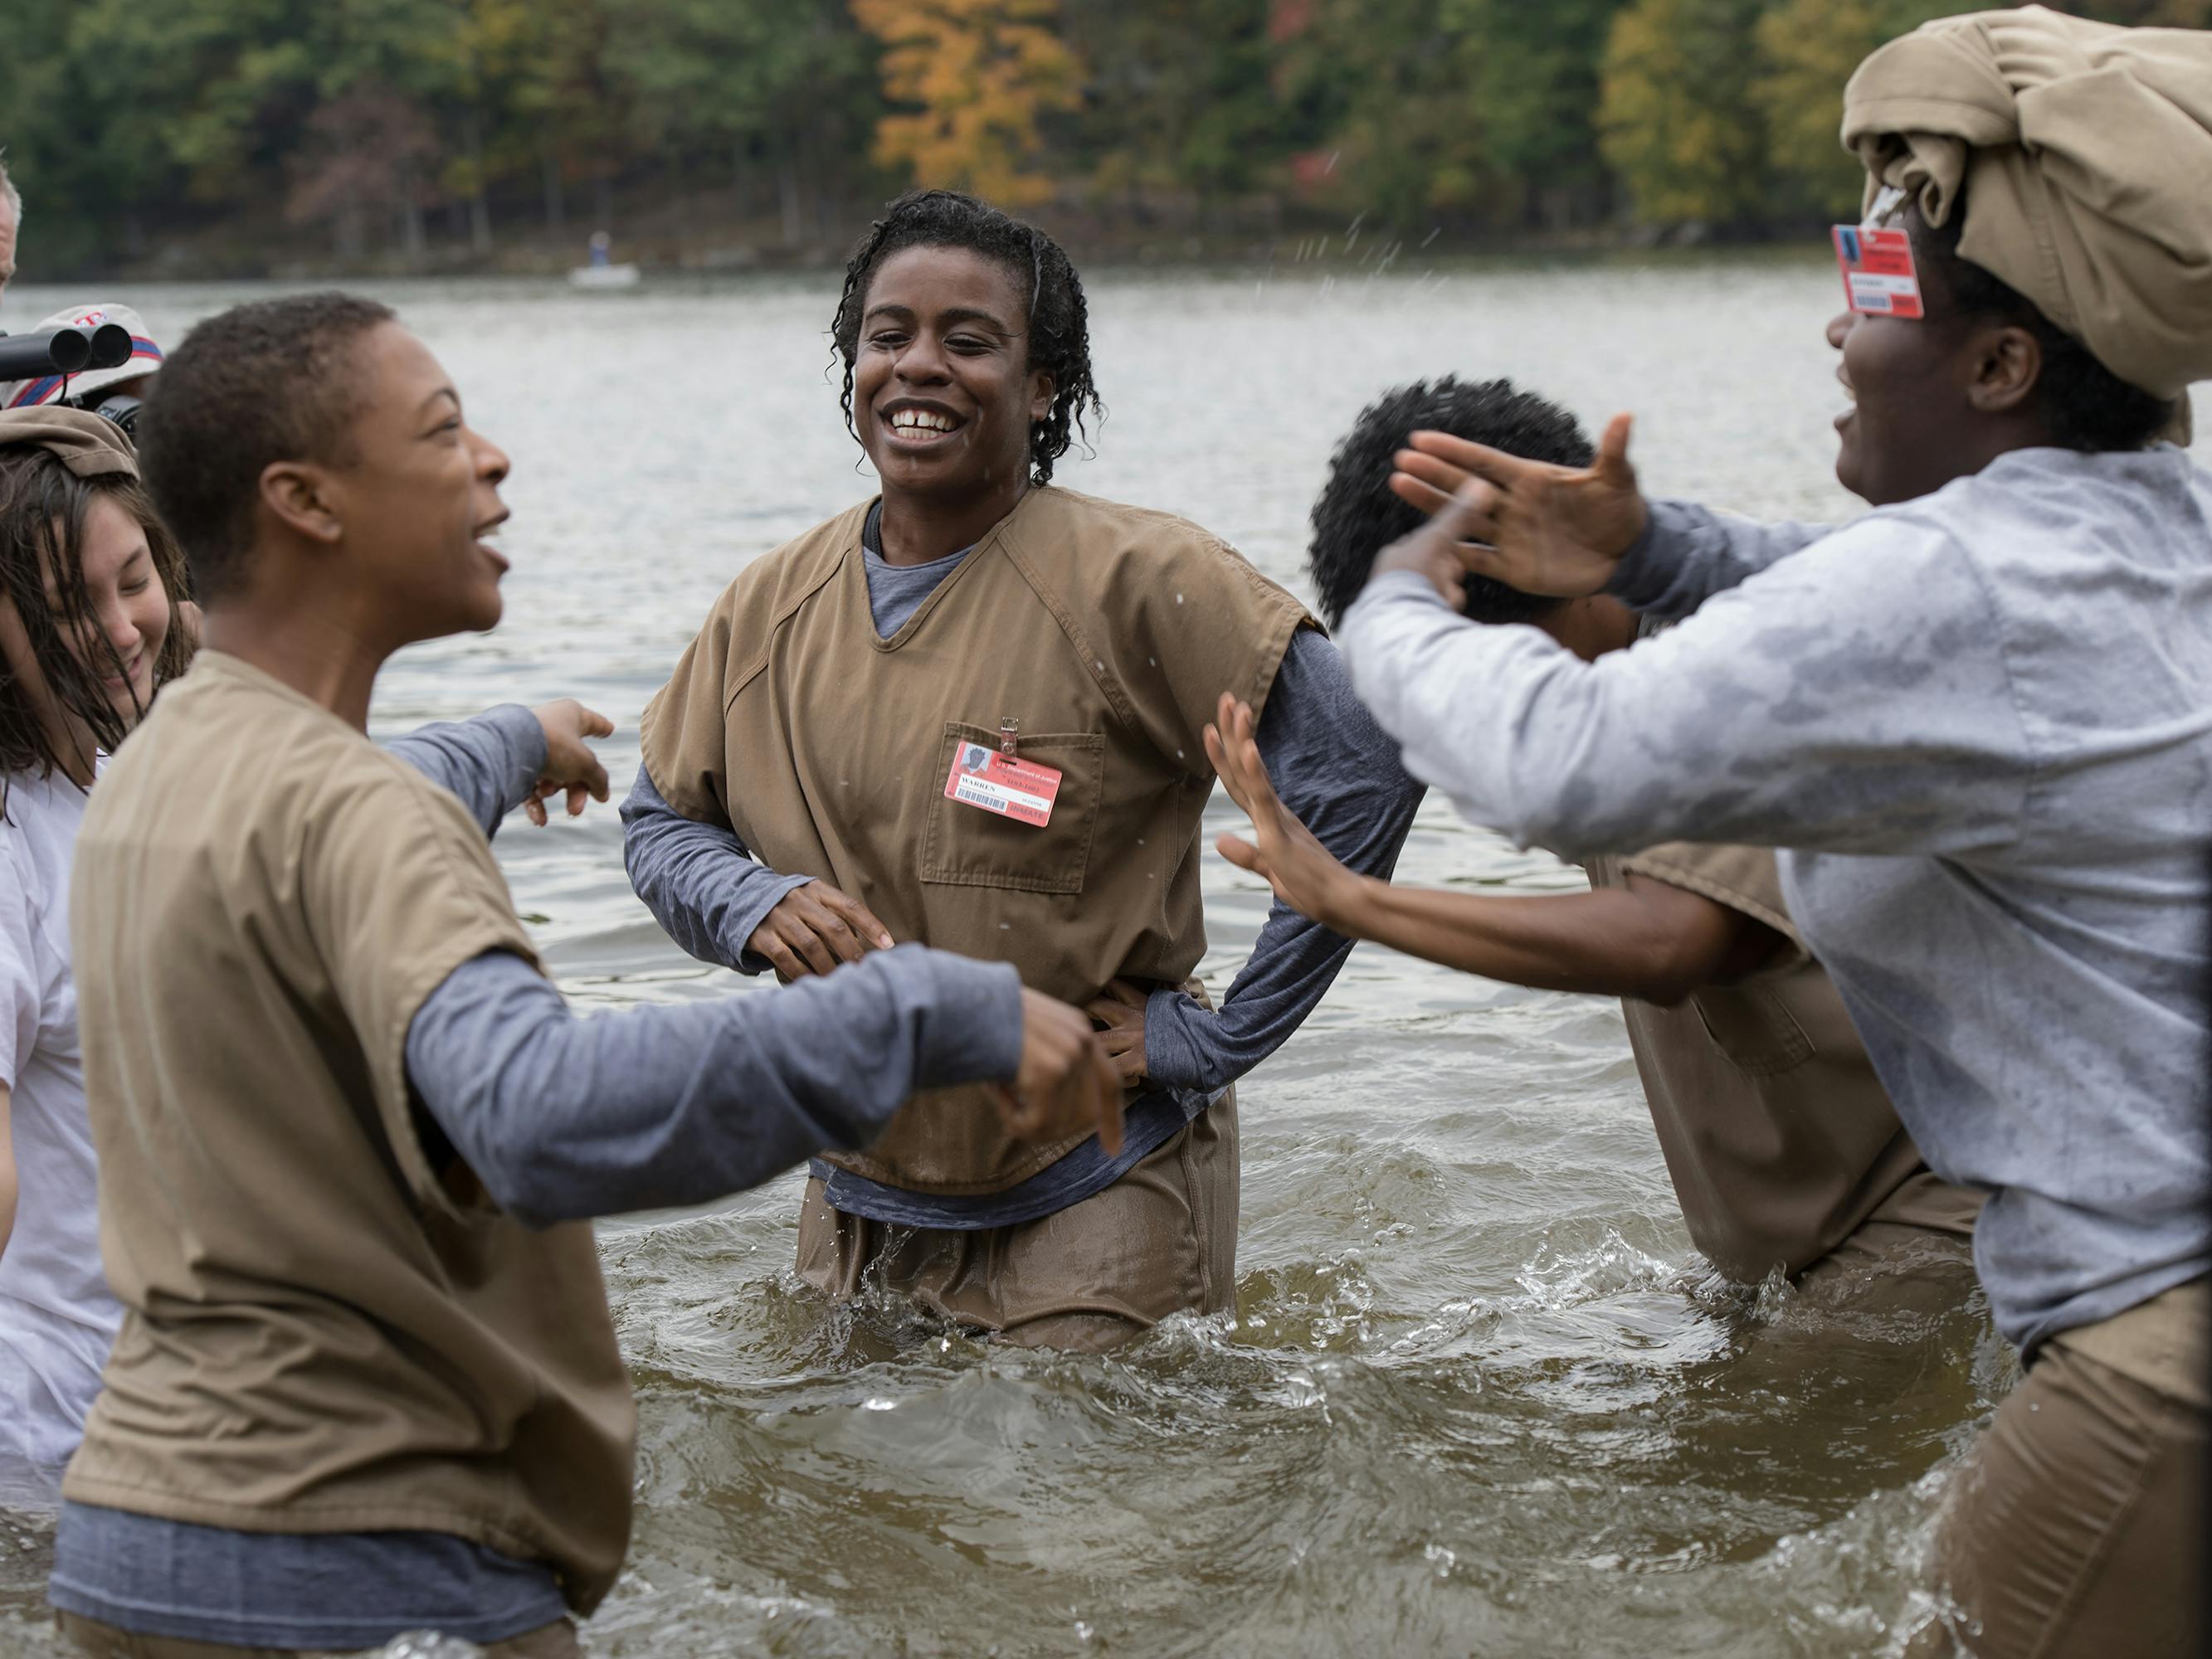 Suzanne “Crazy Eyes” Warren (Uzo Aduba) splashes around in a river with four other women.